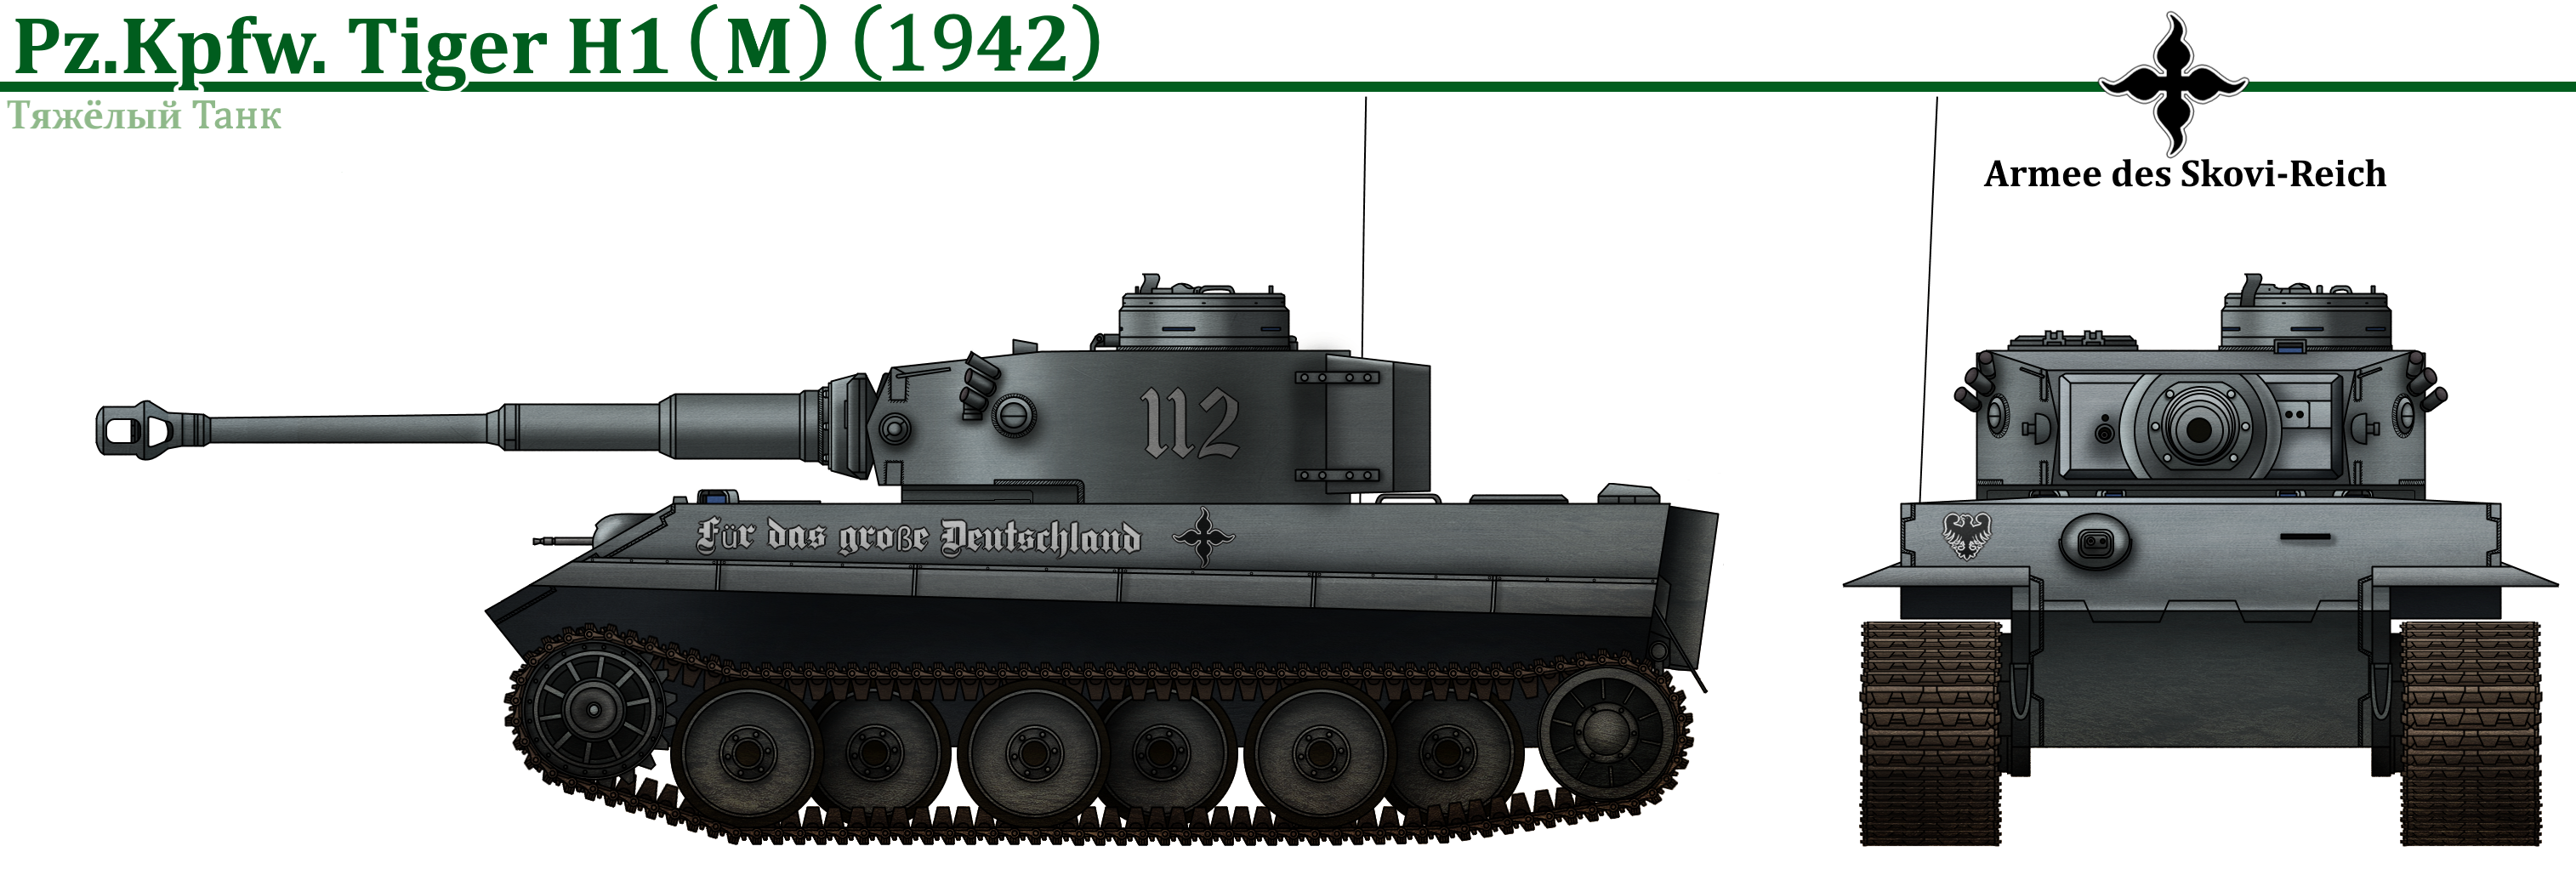 Трансмиссия танка PzKw VI 